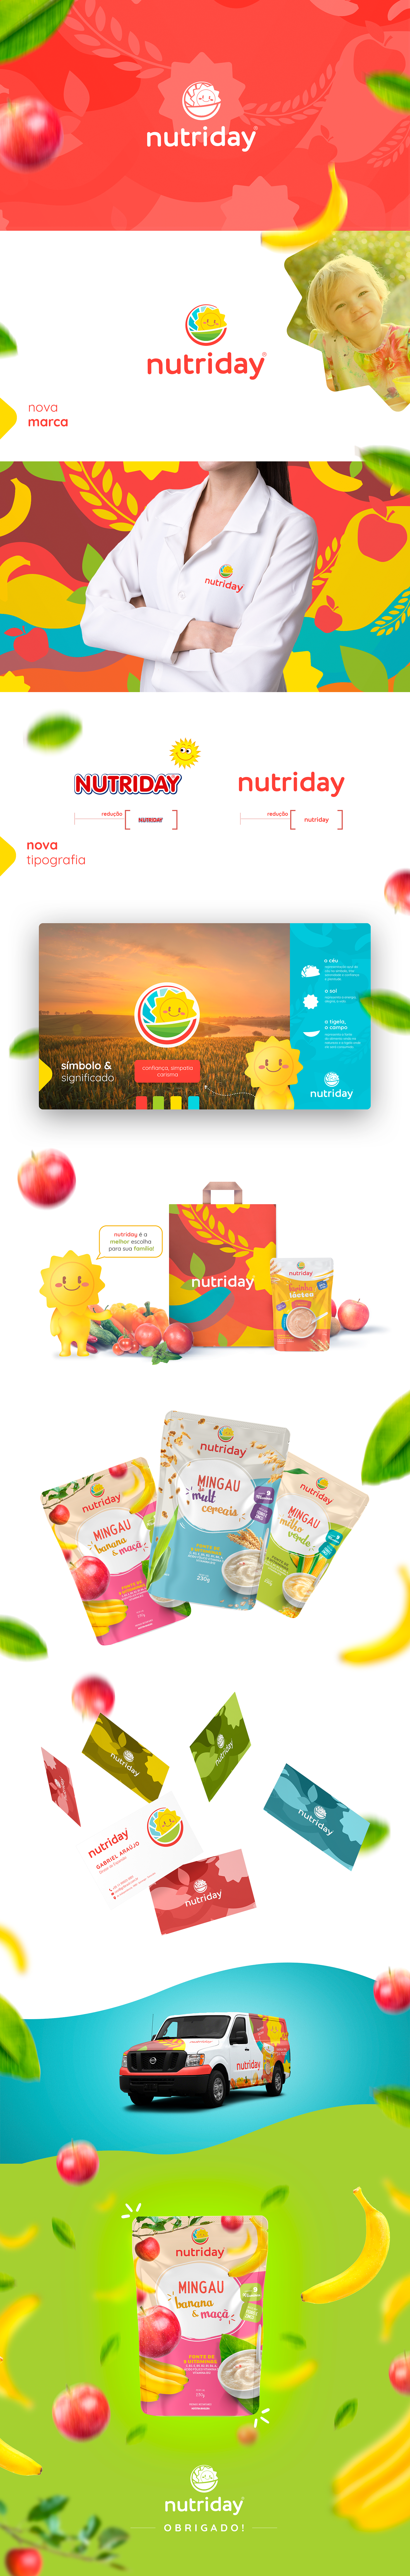 produto mingau nutrition MORNING Sun Mascot Food  brand Rebrand branding 